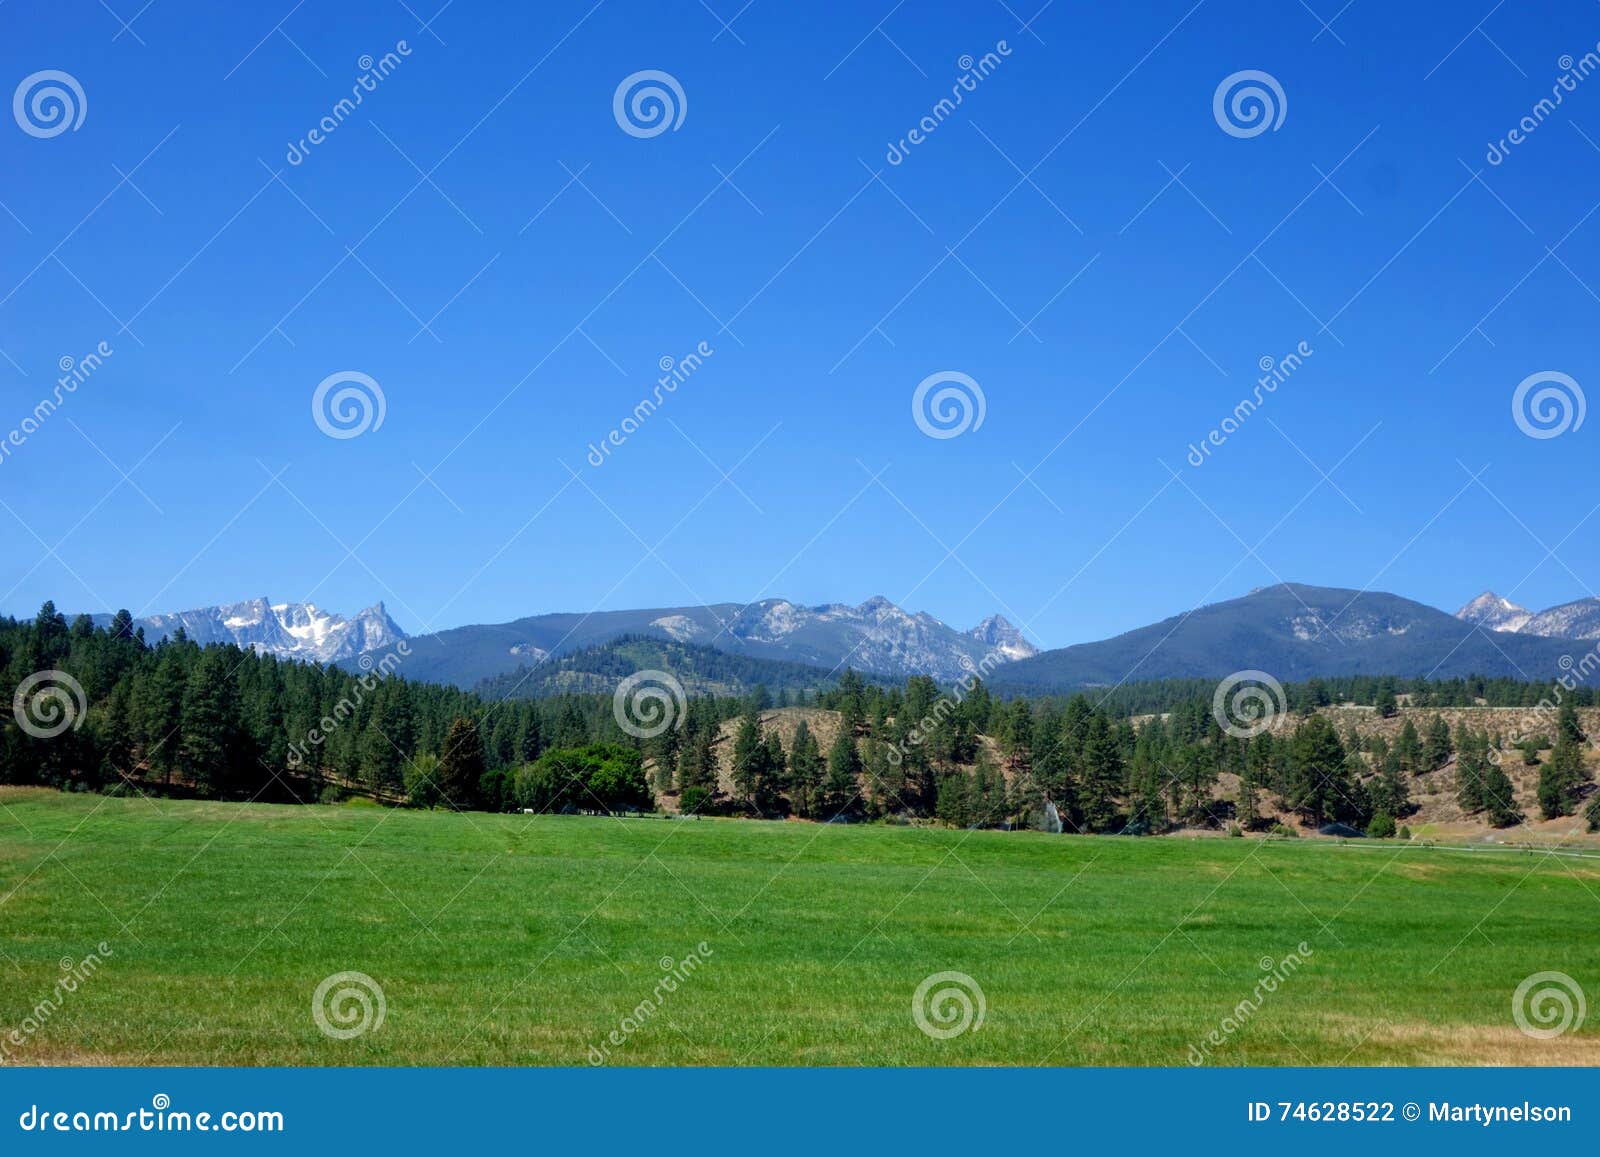 bitterroot mountains near darby, montana